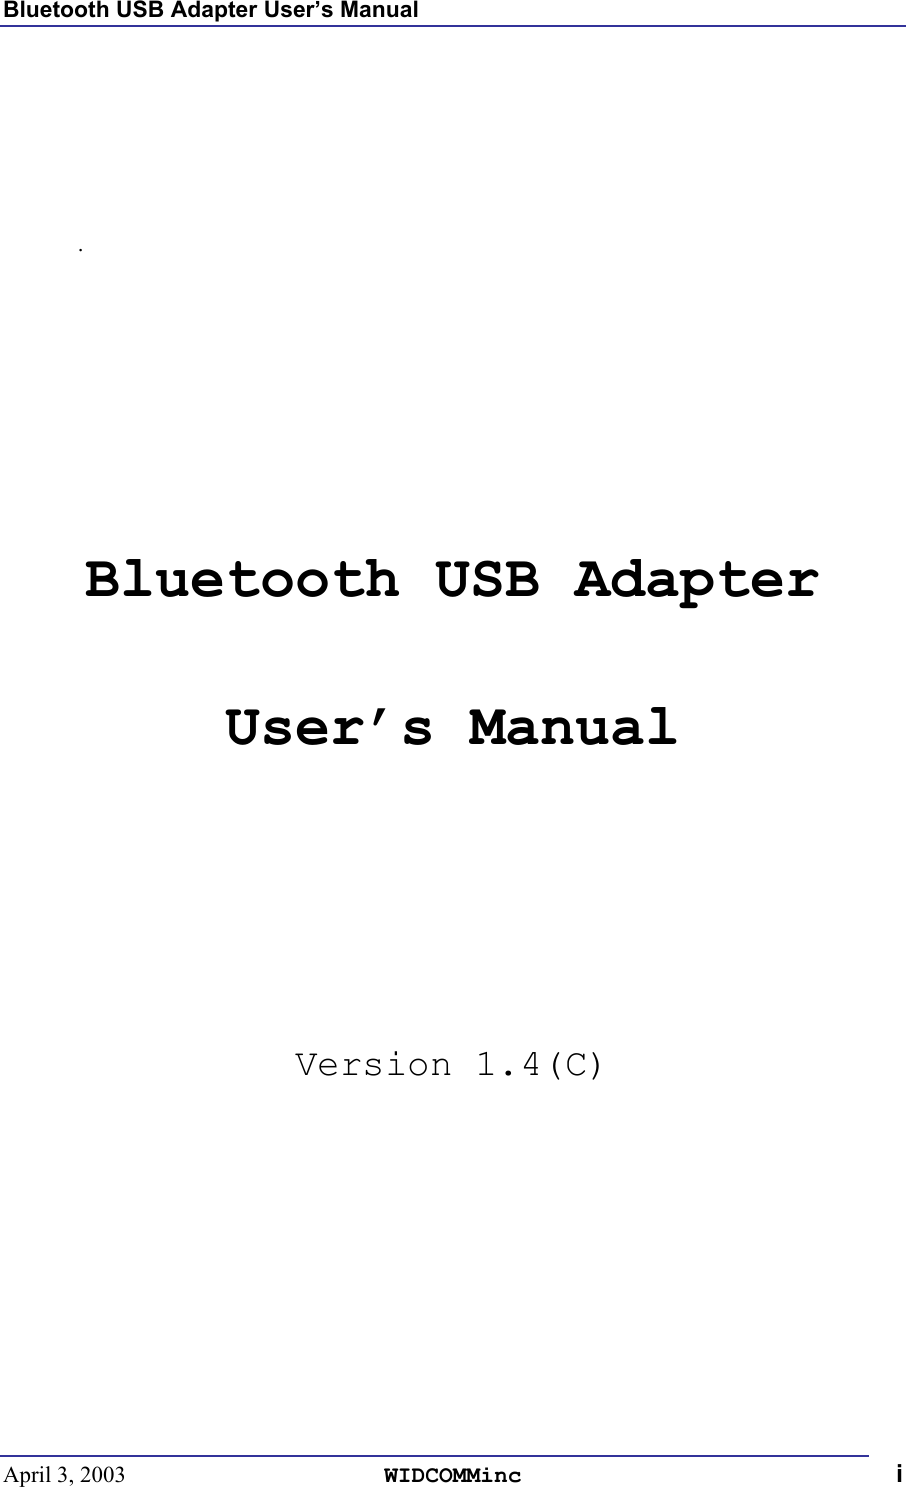 Bluetooth USB Adapter User’s Manual April 3, 2003  WIDCOMMinc i      .         Bluetooth USB Adapter User’s Manual      Version 1.4(C) 